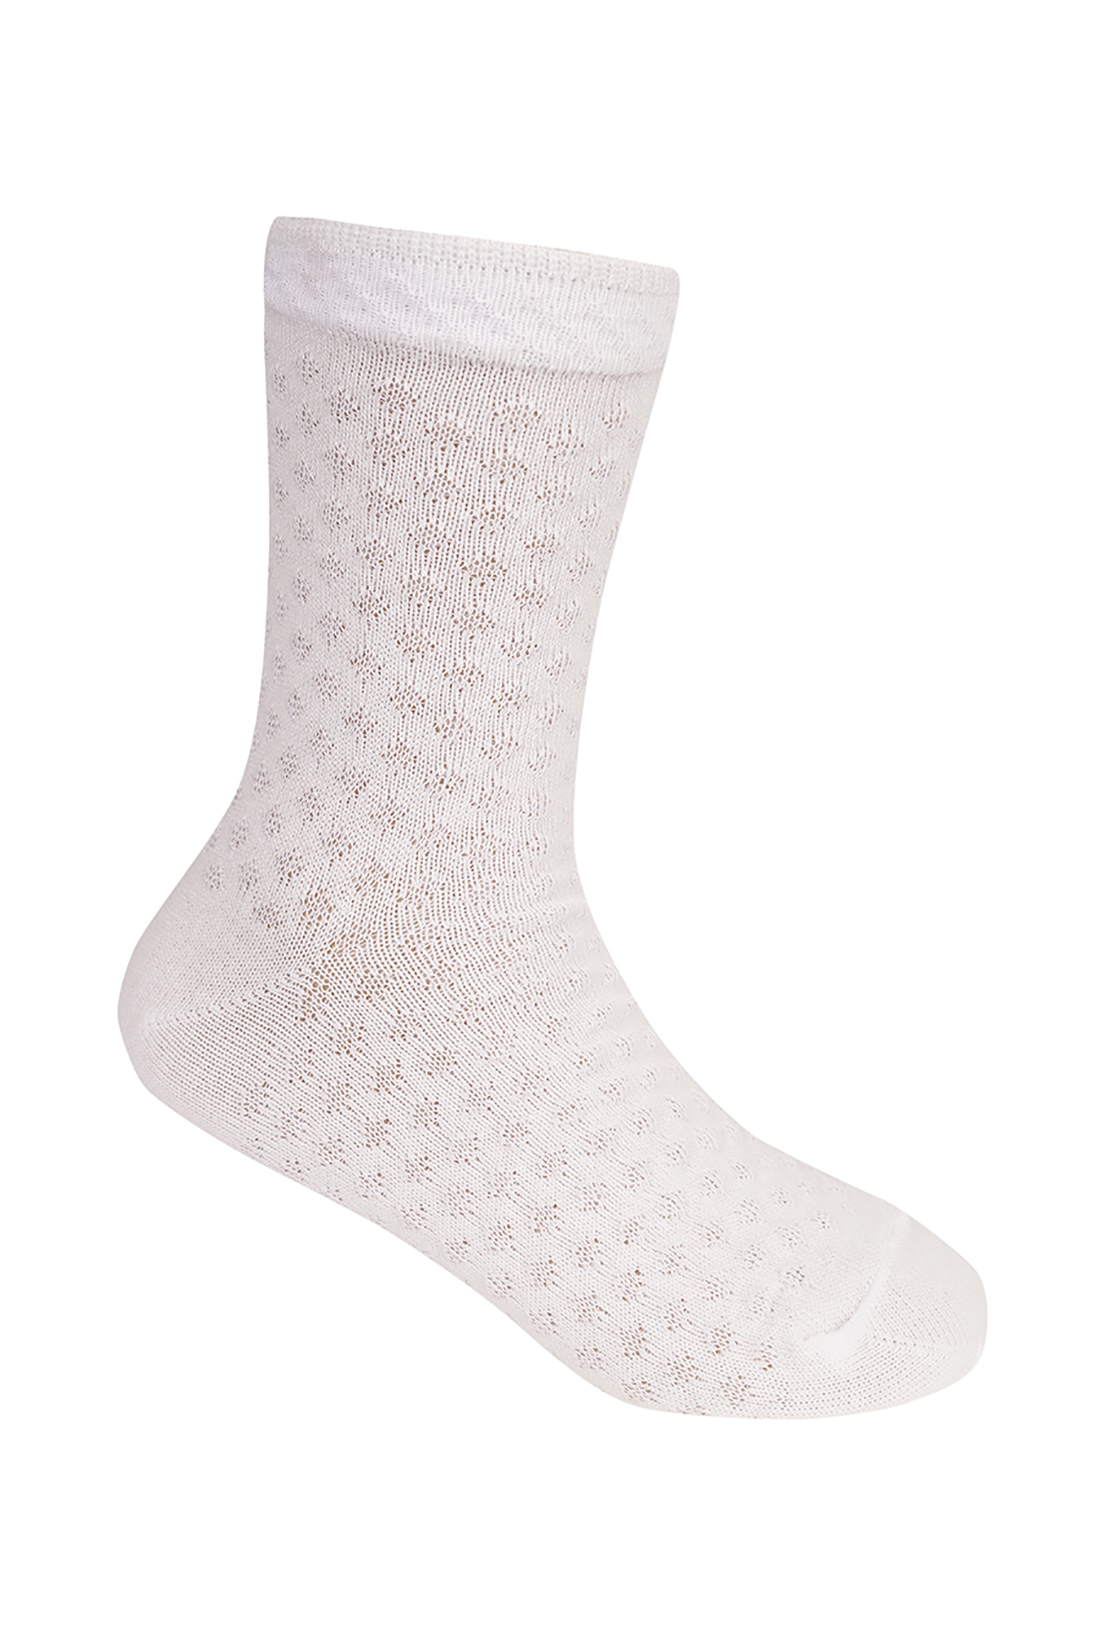 Носки для девочки (арт. baon BK390009), размер 32/34, цвет белый